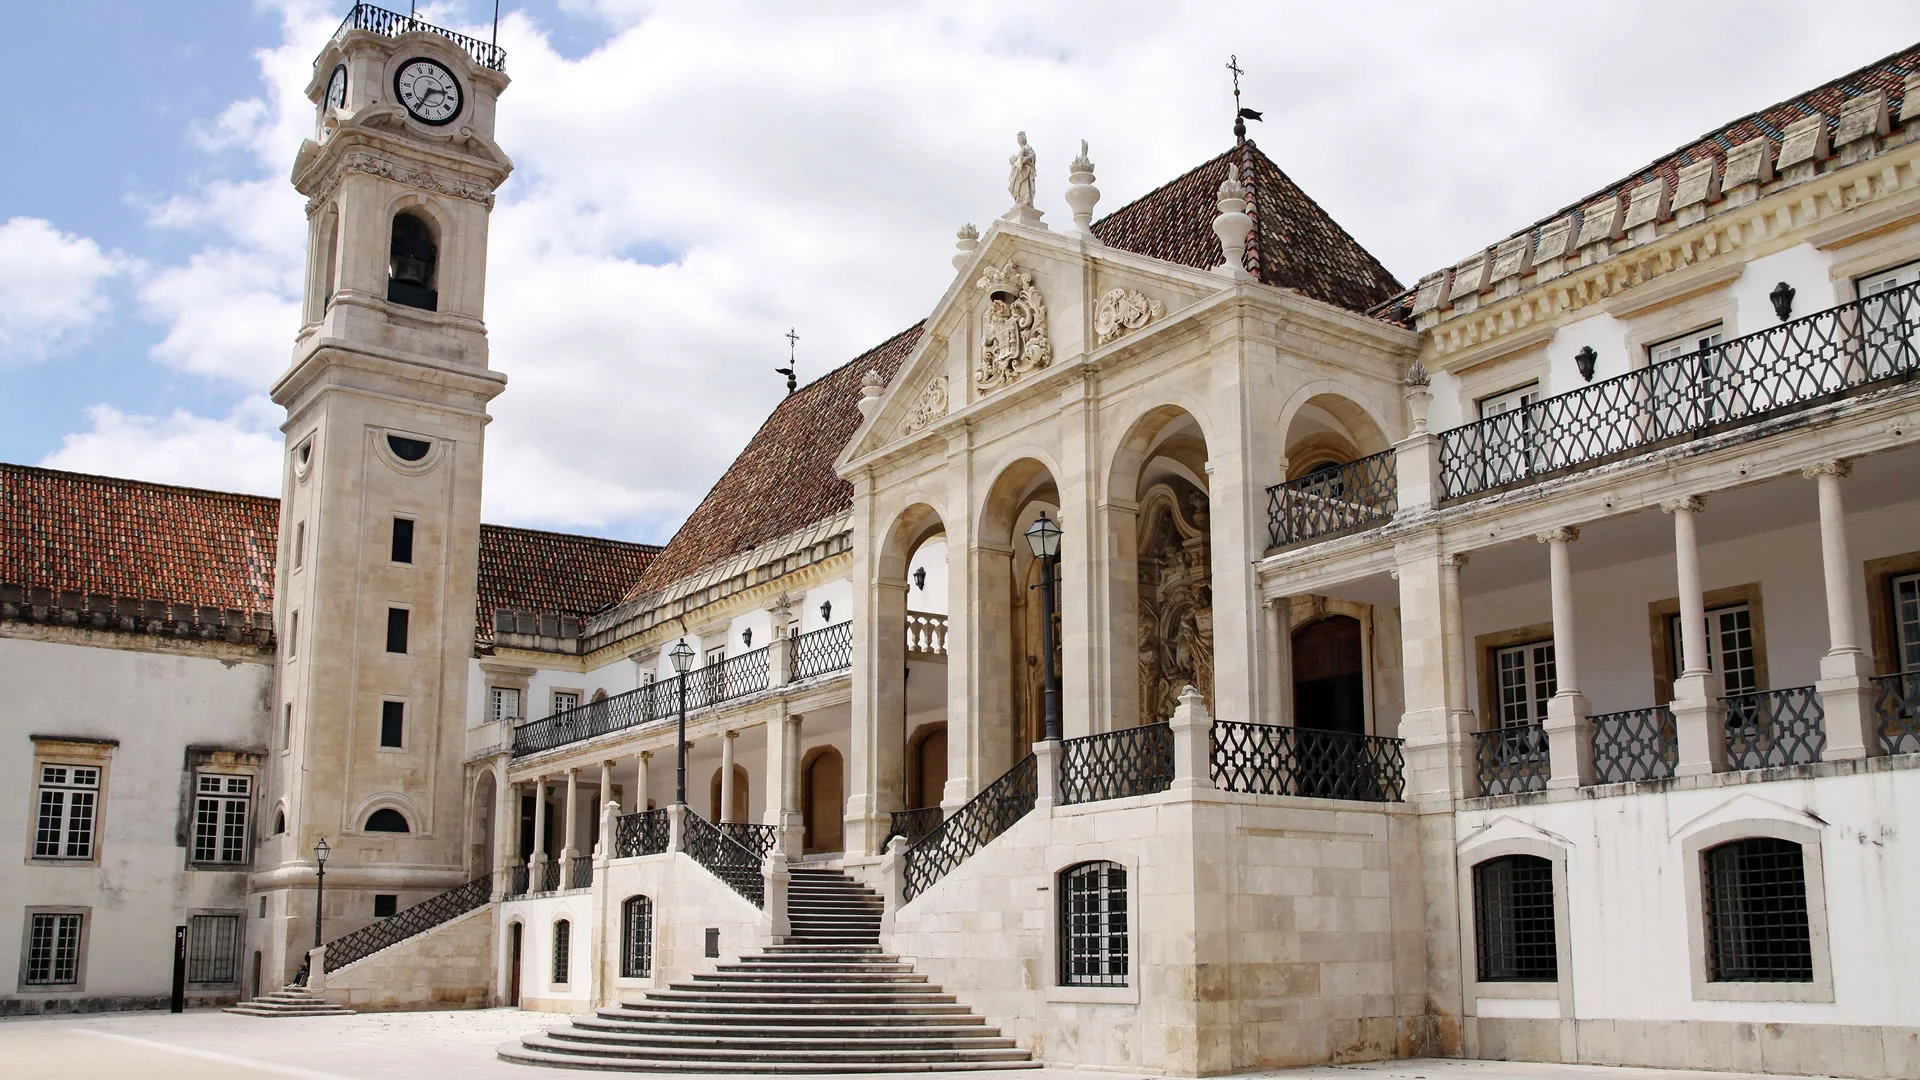 One of the buildings of the Velha Universidade, Coimbra, Portugal